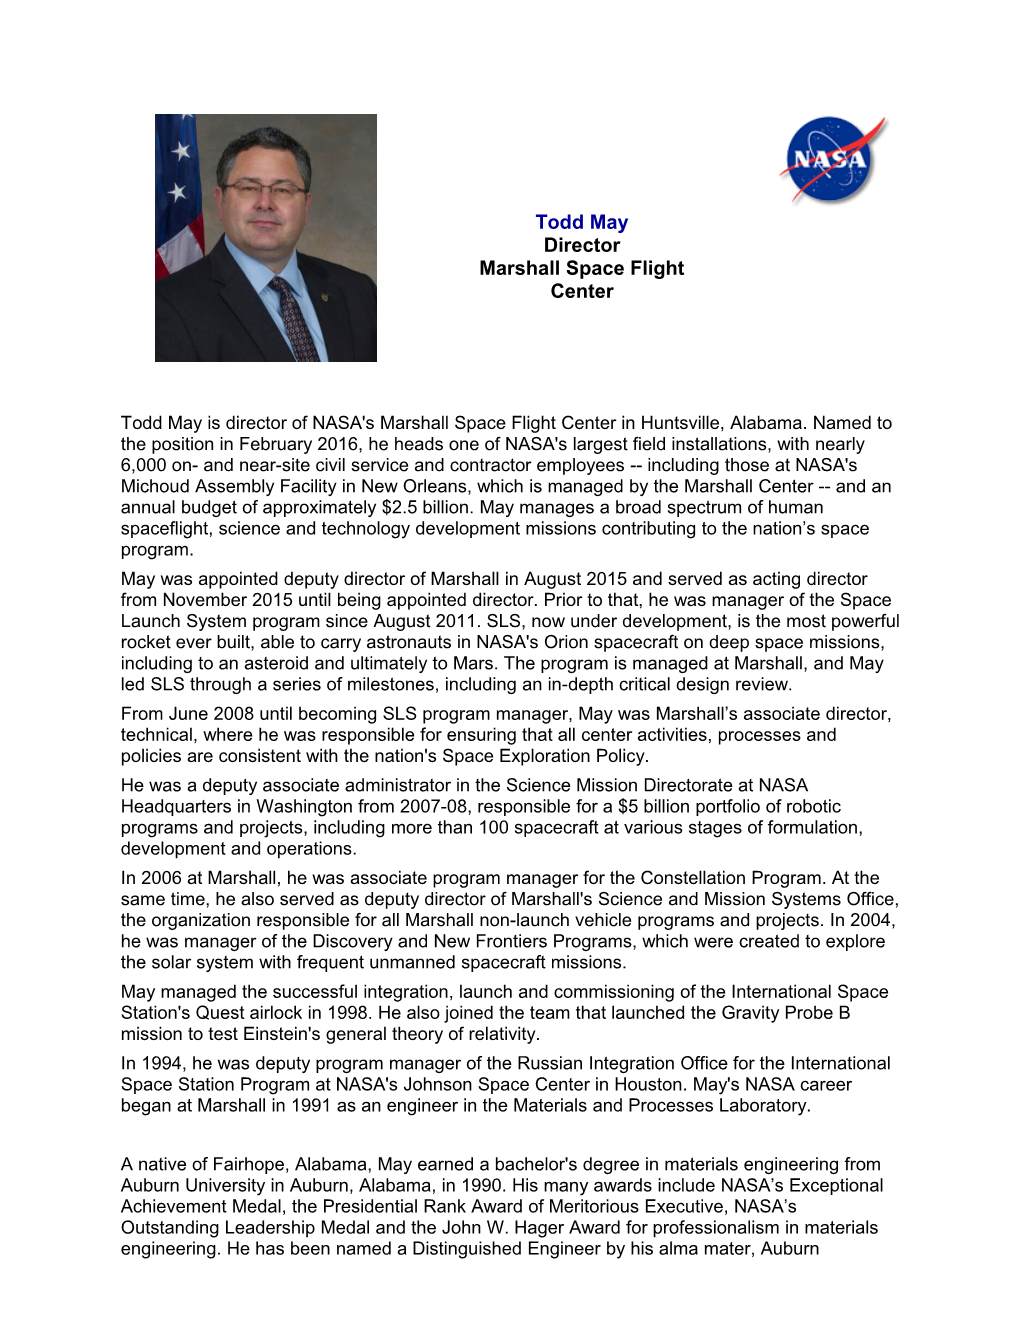 Todd May Is Director of NASA's Marshall Space Flight Center in Huntsville, Alabama. Named